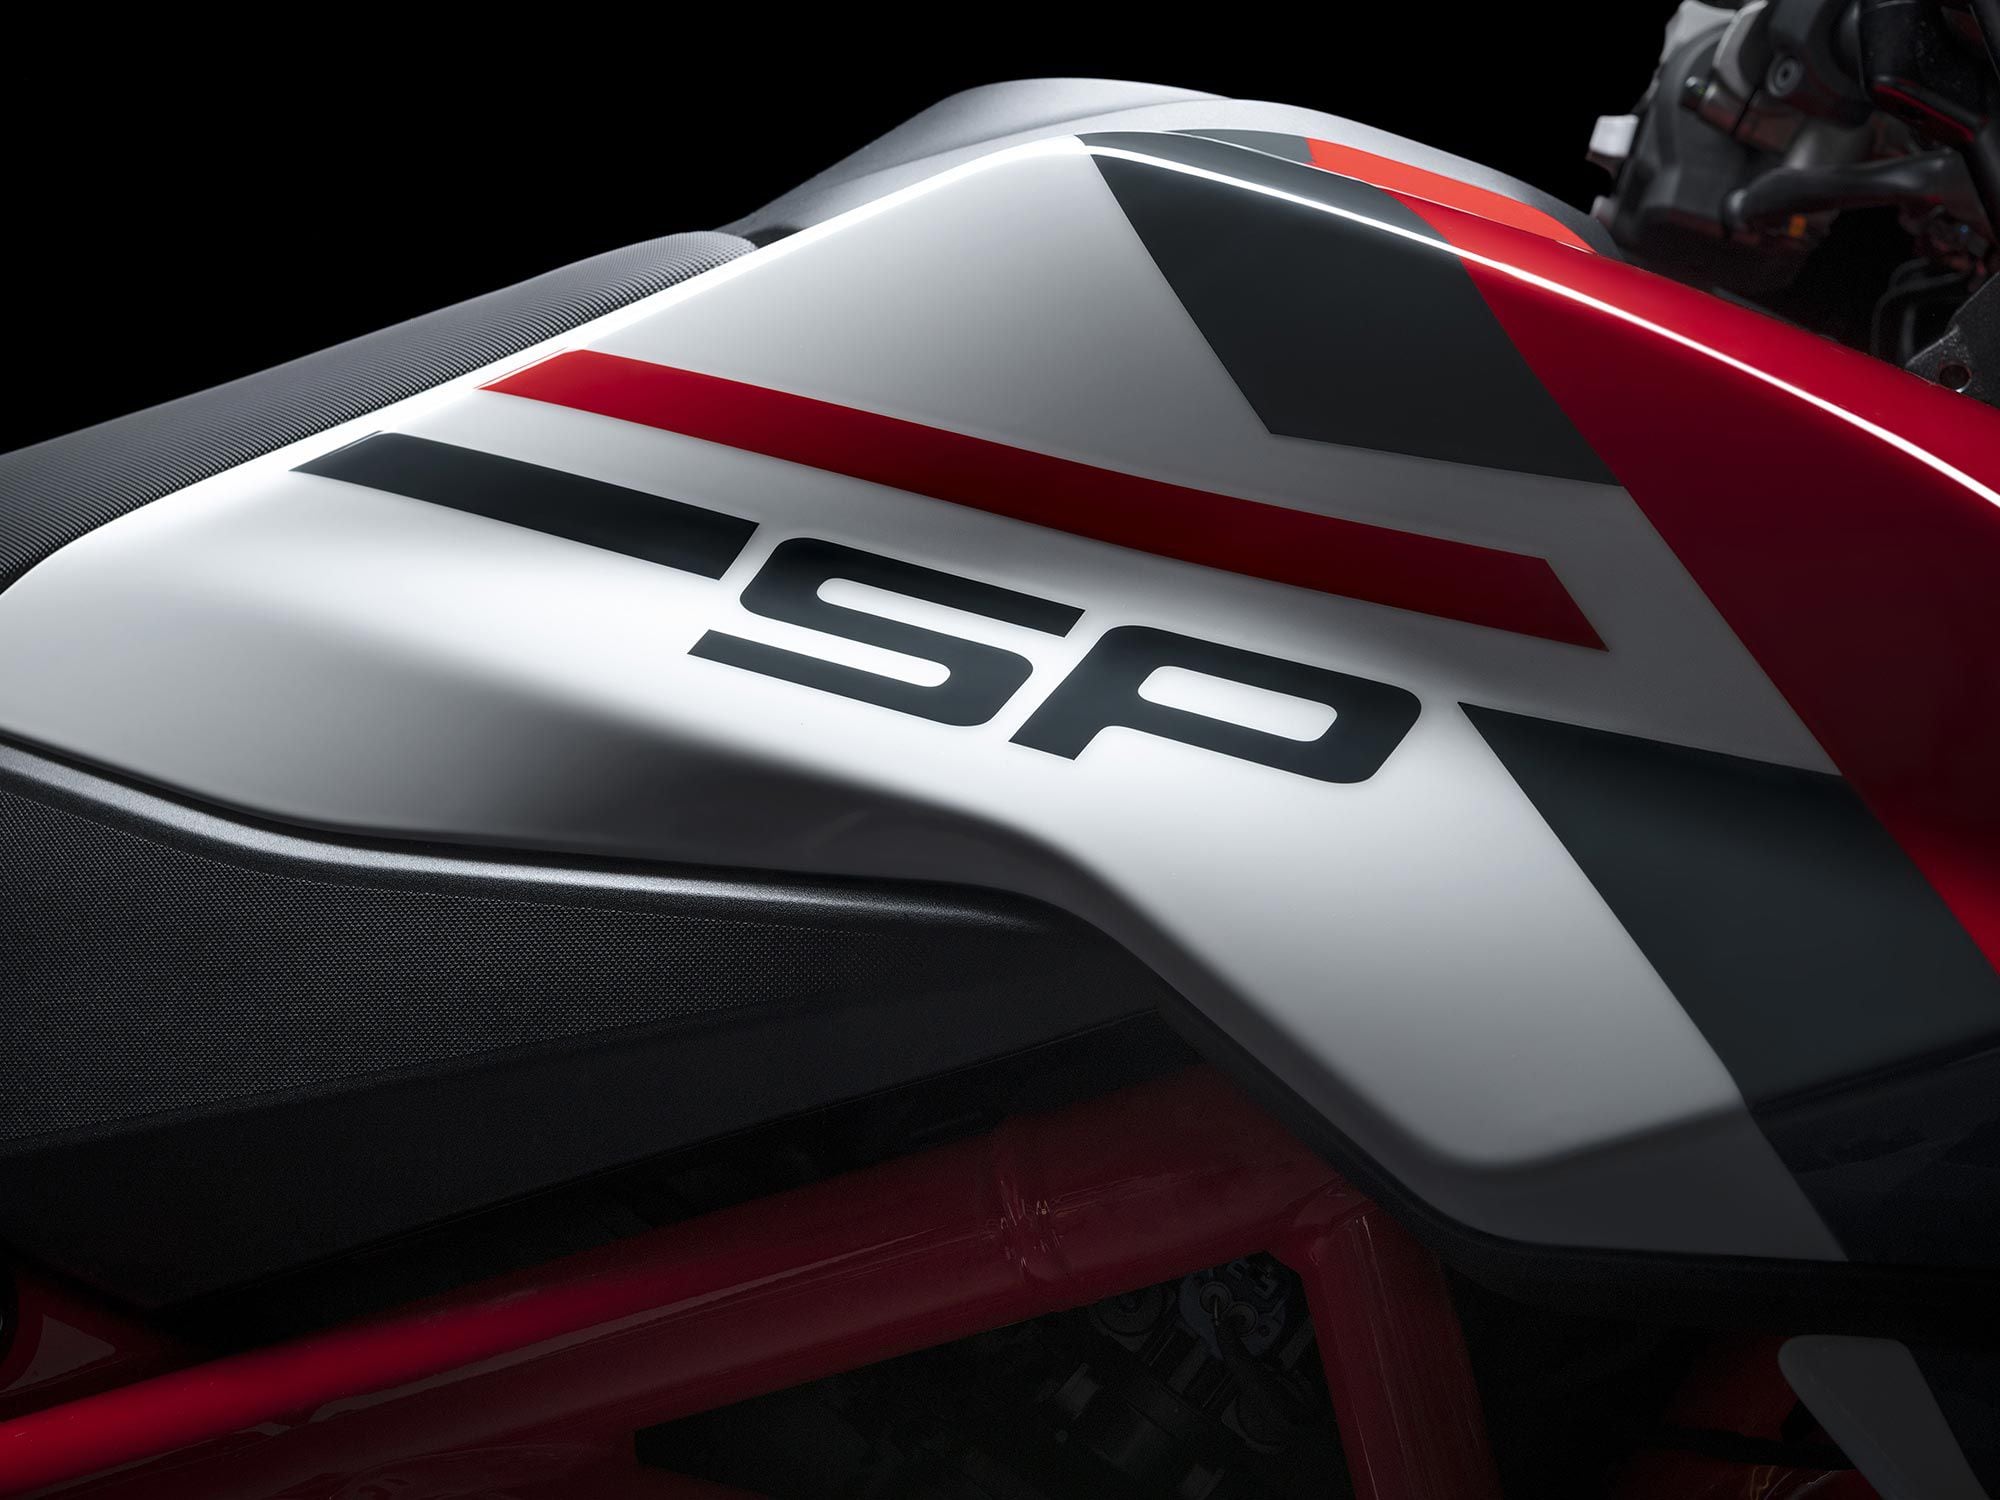 The SP’s new livery has a certain Ducati Corse panache.